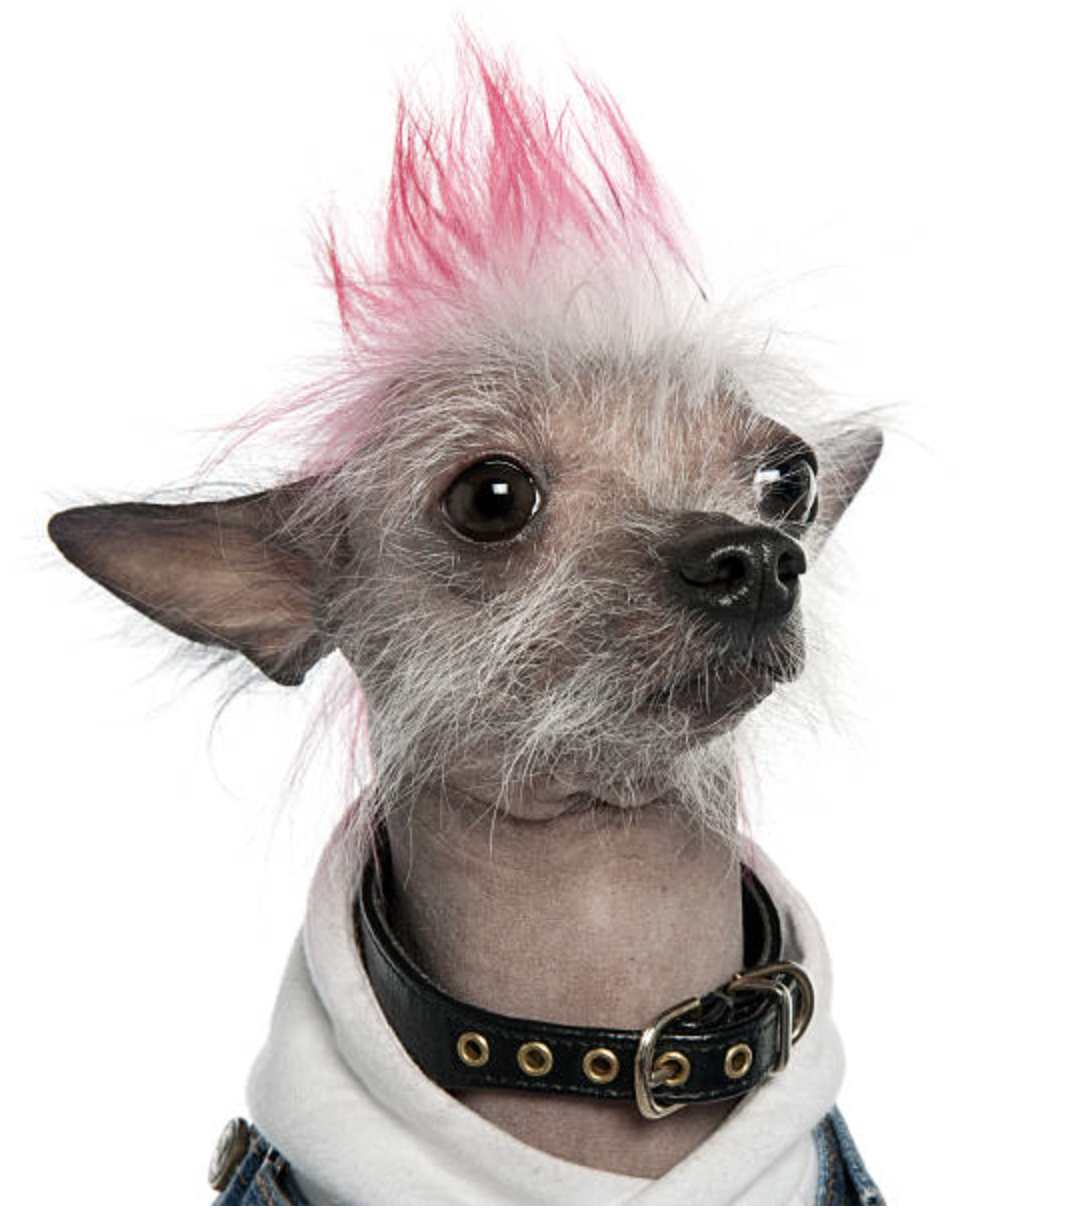 Punk Rock dog - Musical dog names